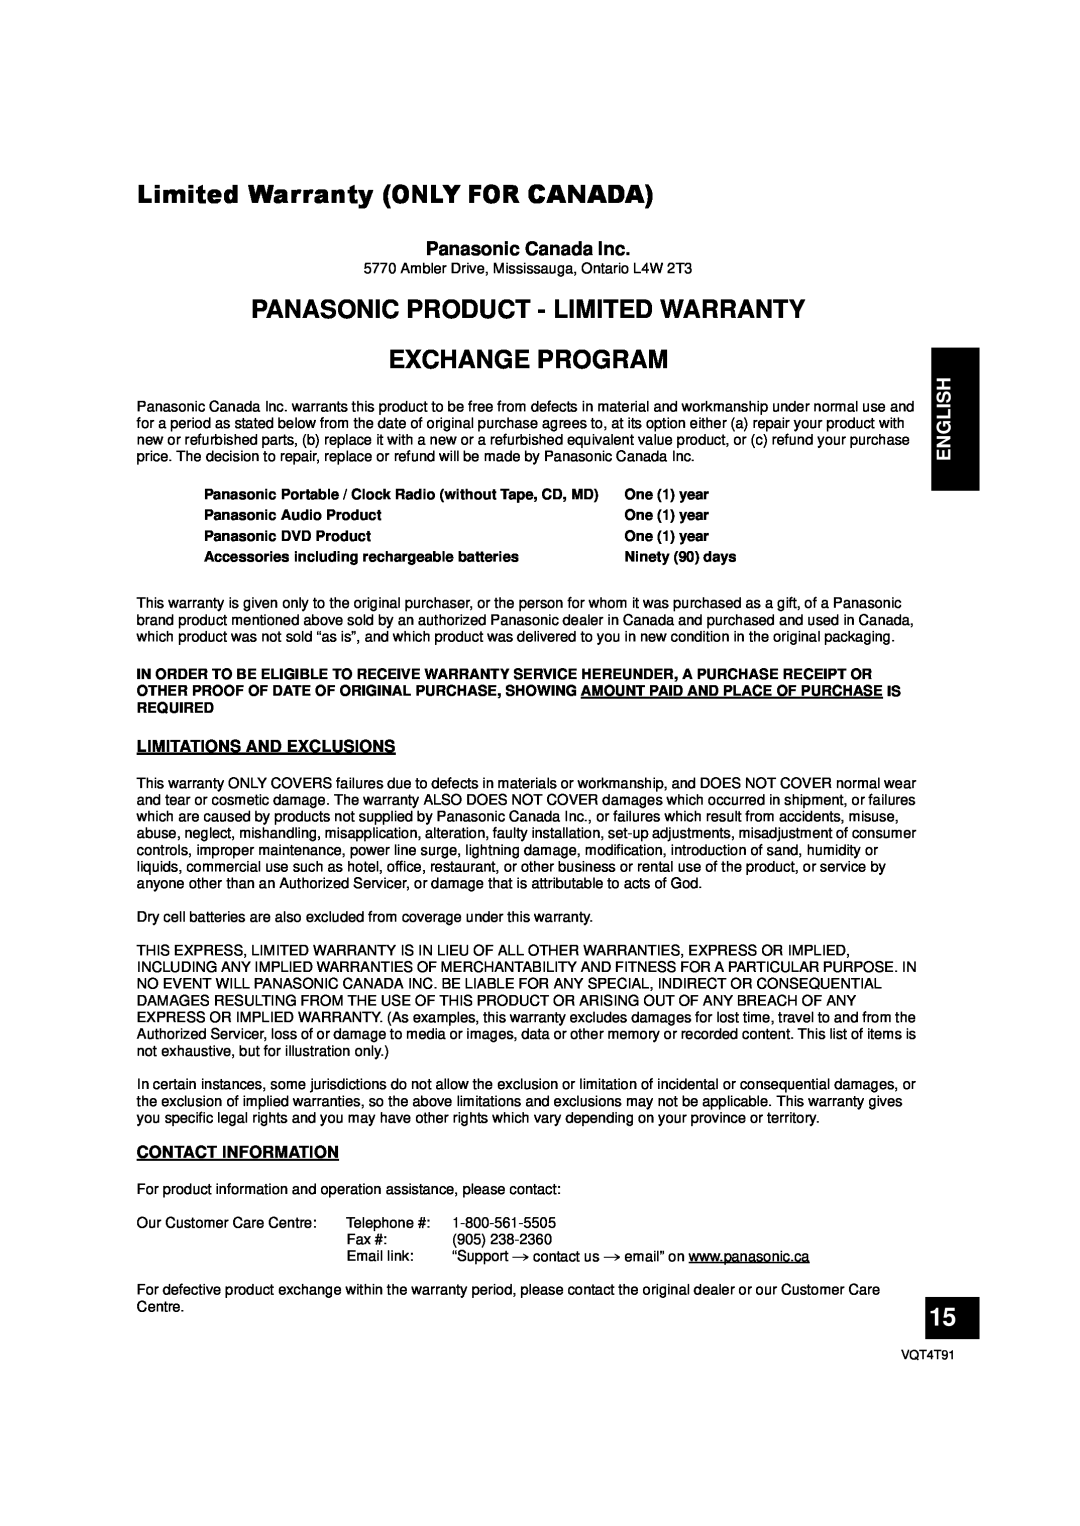 Panasonic SC-NE1 Limited Warranty ONLY FOR CANADA, Panasonic Product - Limited Warranty, Exchange Program, English 